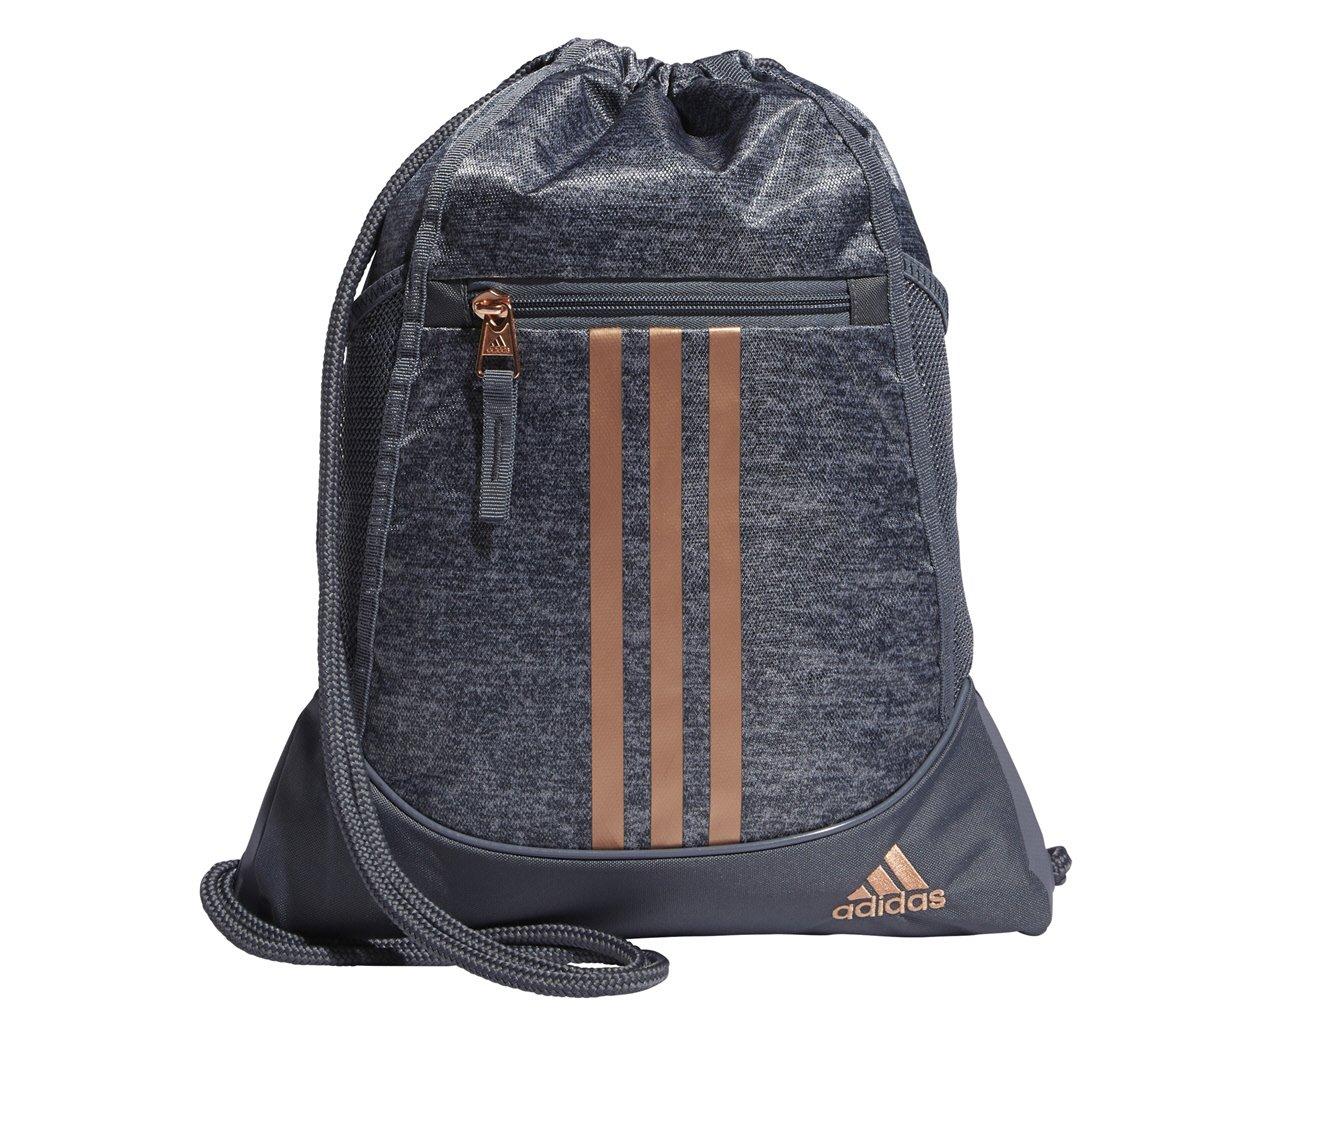 Adidas Alliance II Sackpack Sustainable Drawstring Bag